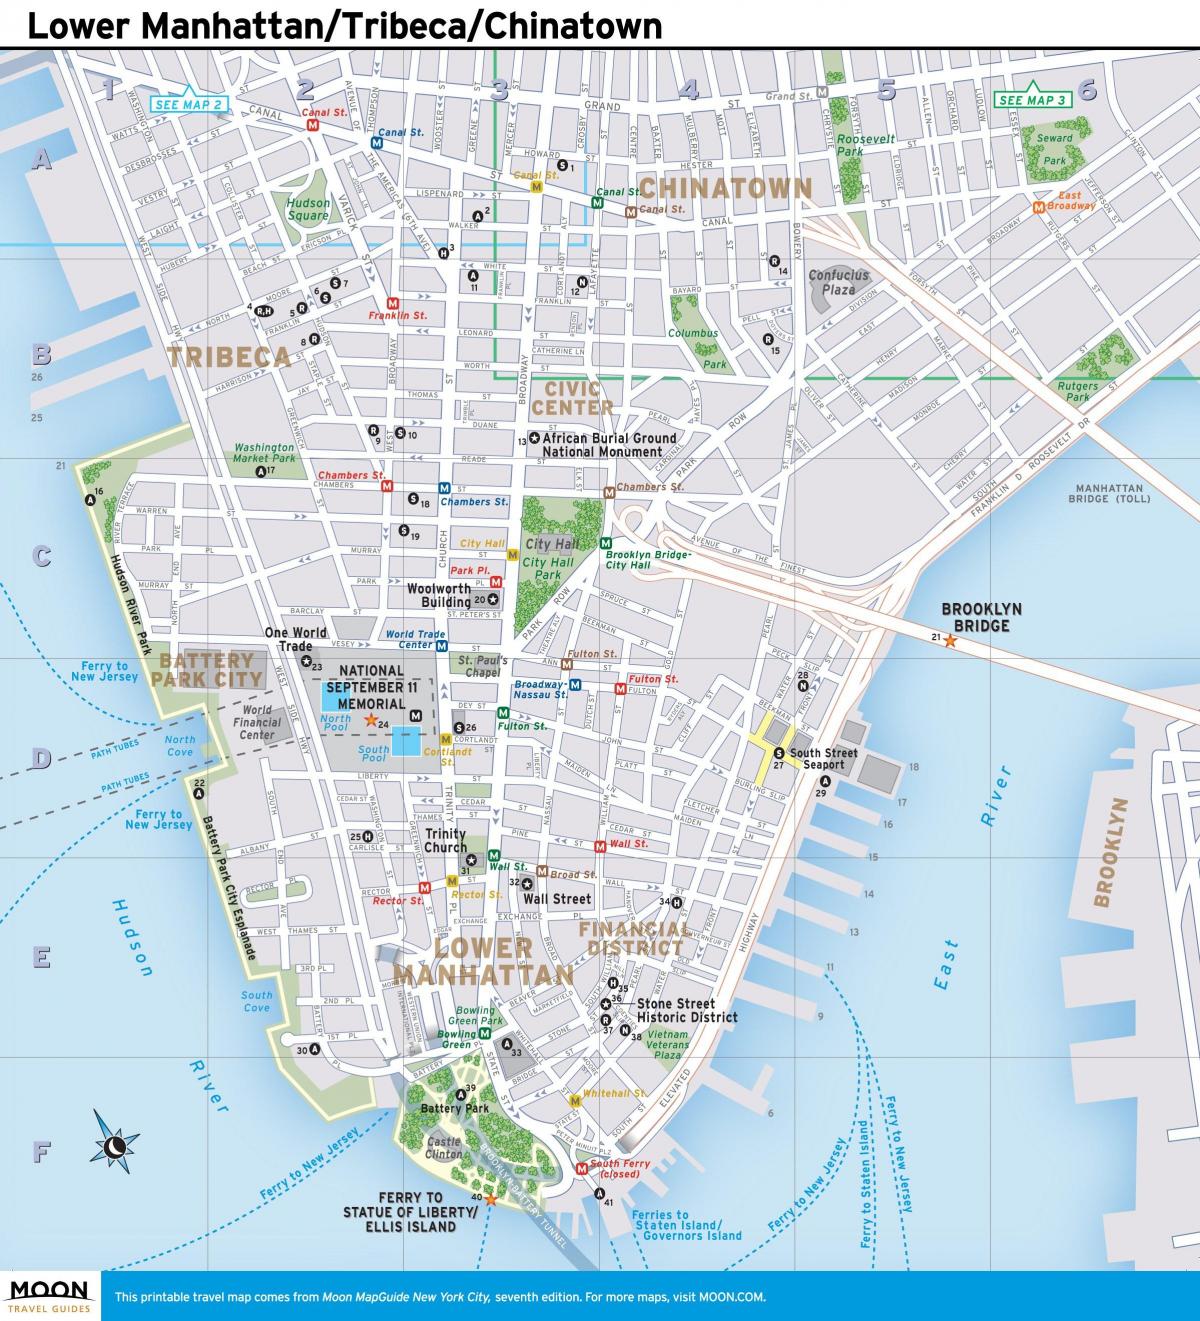 kort over lower Manhattan ny